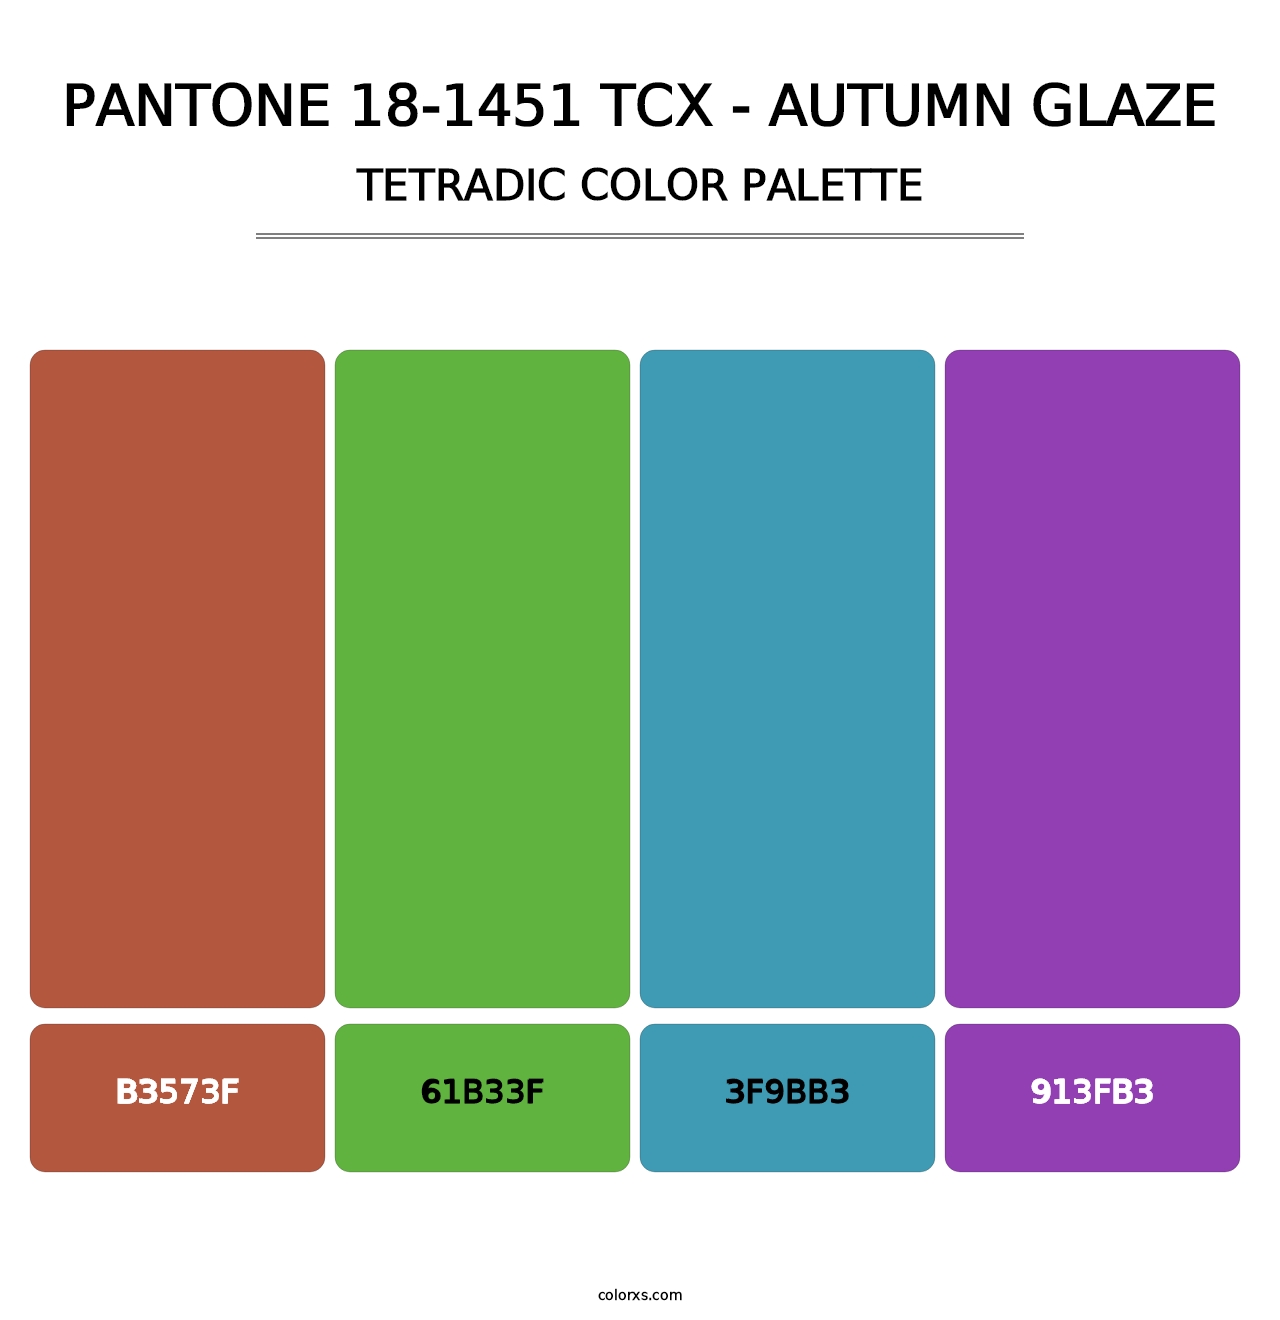 PANTONE 18-1451 TCX - Autumn Glaze - Tetradic Color Palette